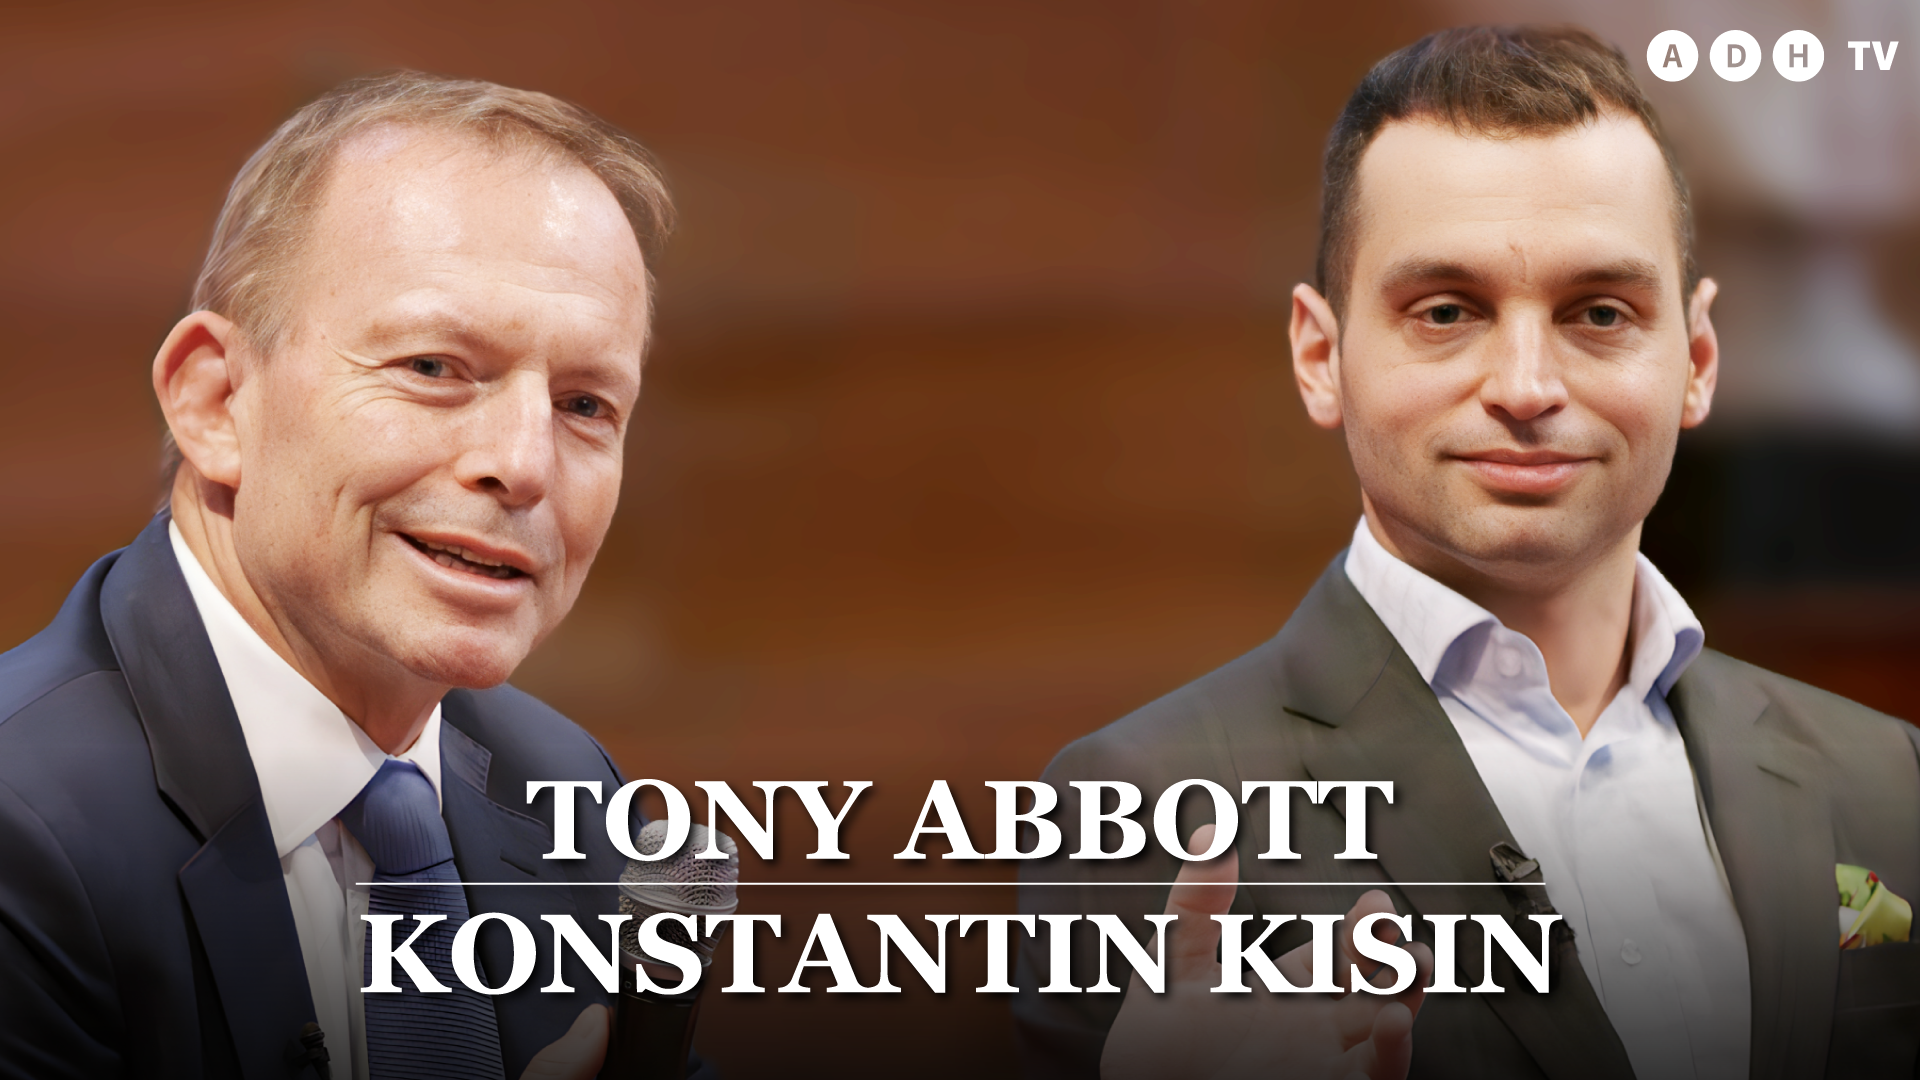 Tony Abbott and Konstantin Kisin